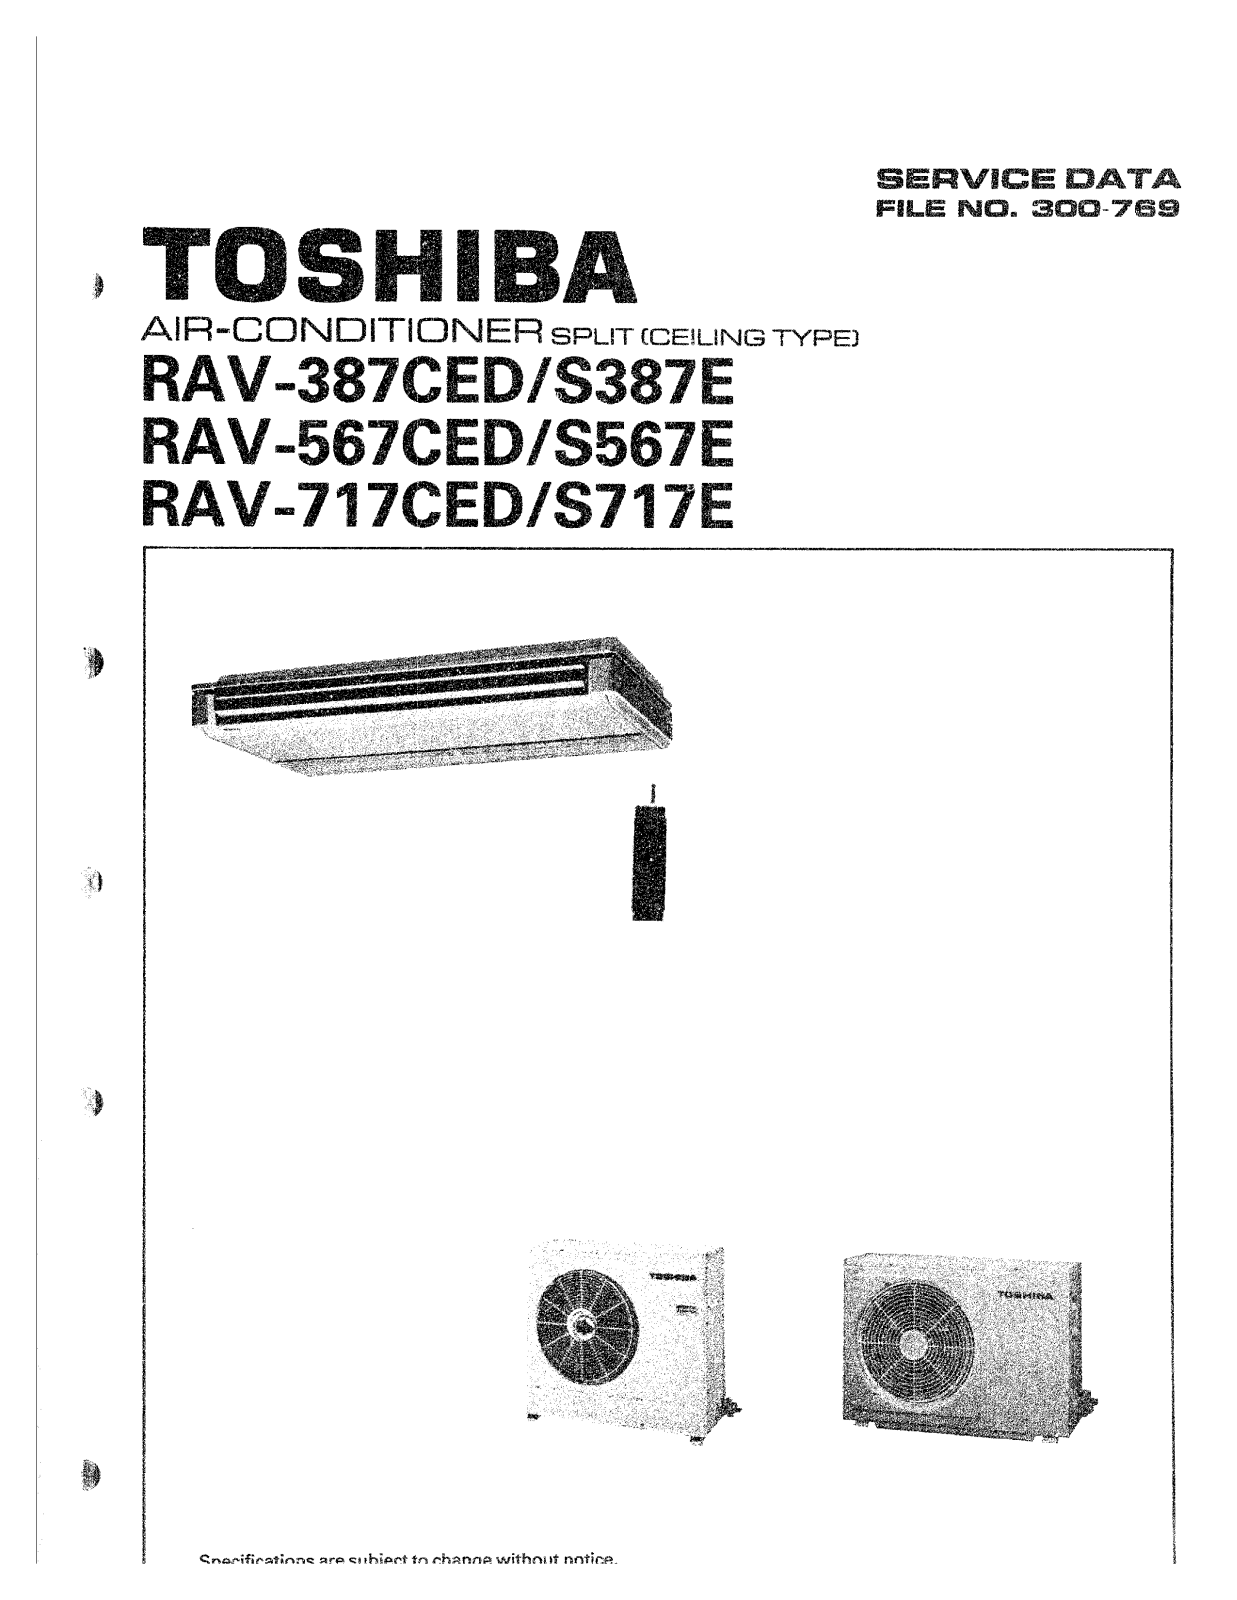 Toshiba RAV-S387E, RAV-S717E, RAV-567 CED, RAV-S567E, RAV-717 CED SERVICE MANUAL